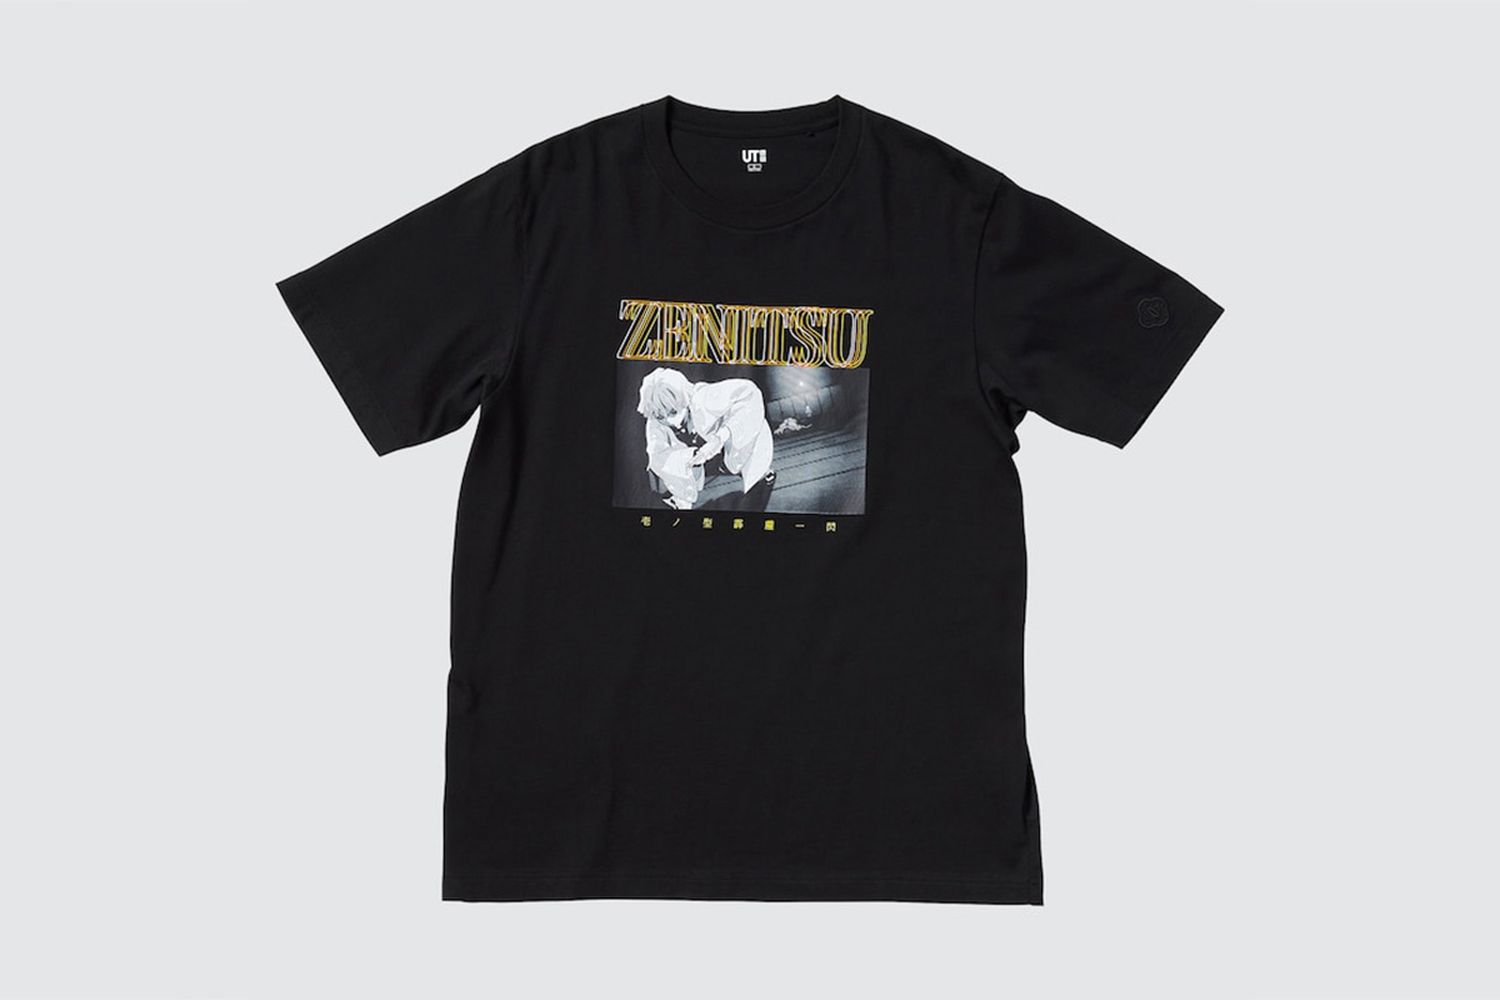 Demon Slayer Zenitsu T-Shirt